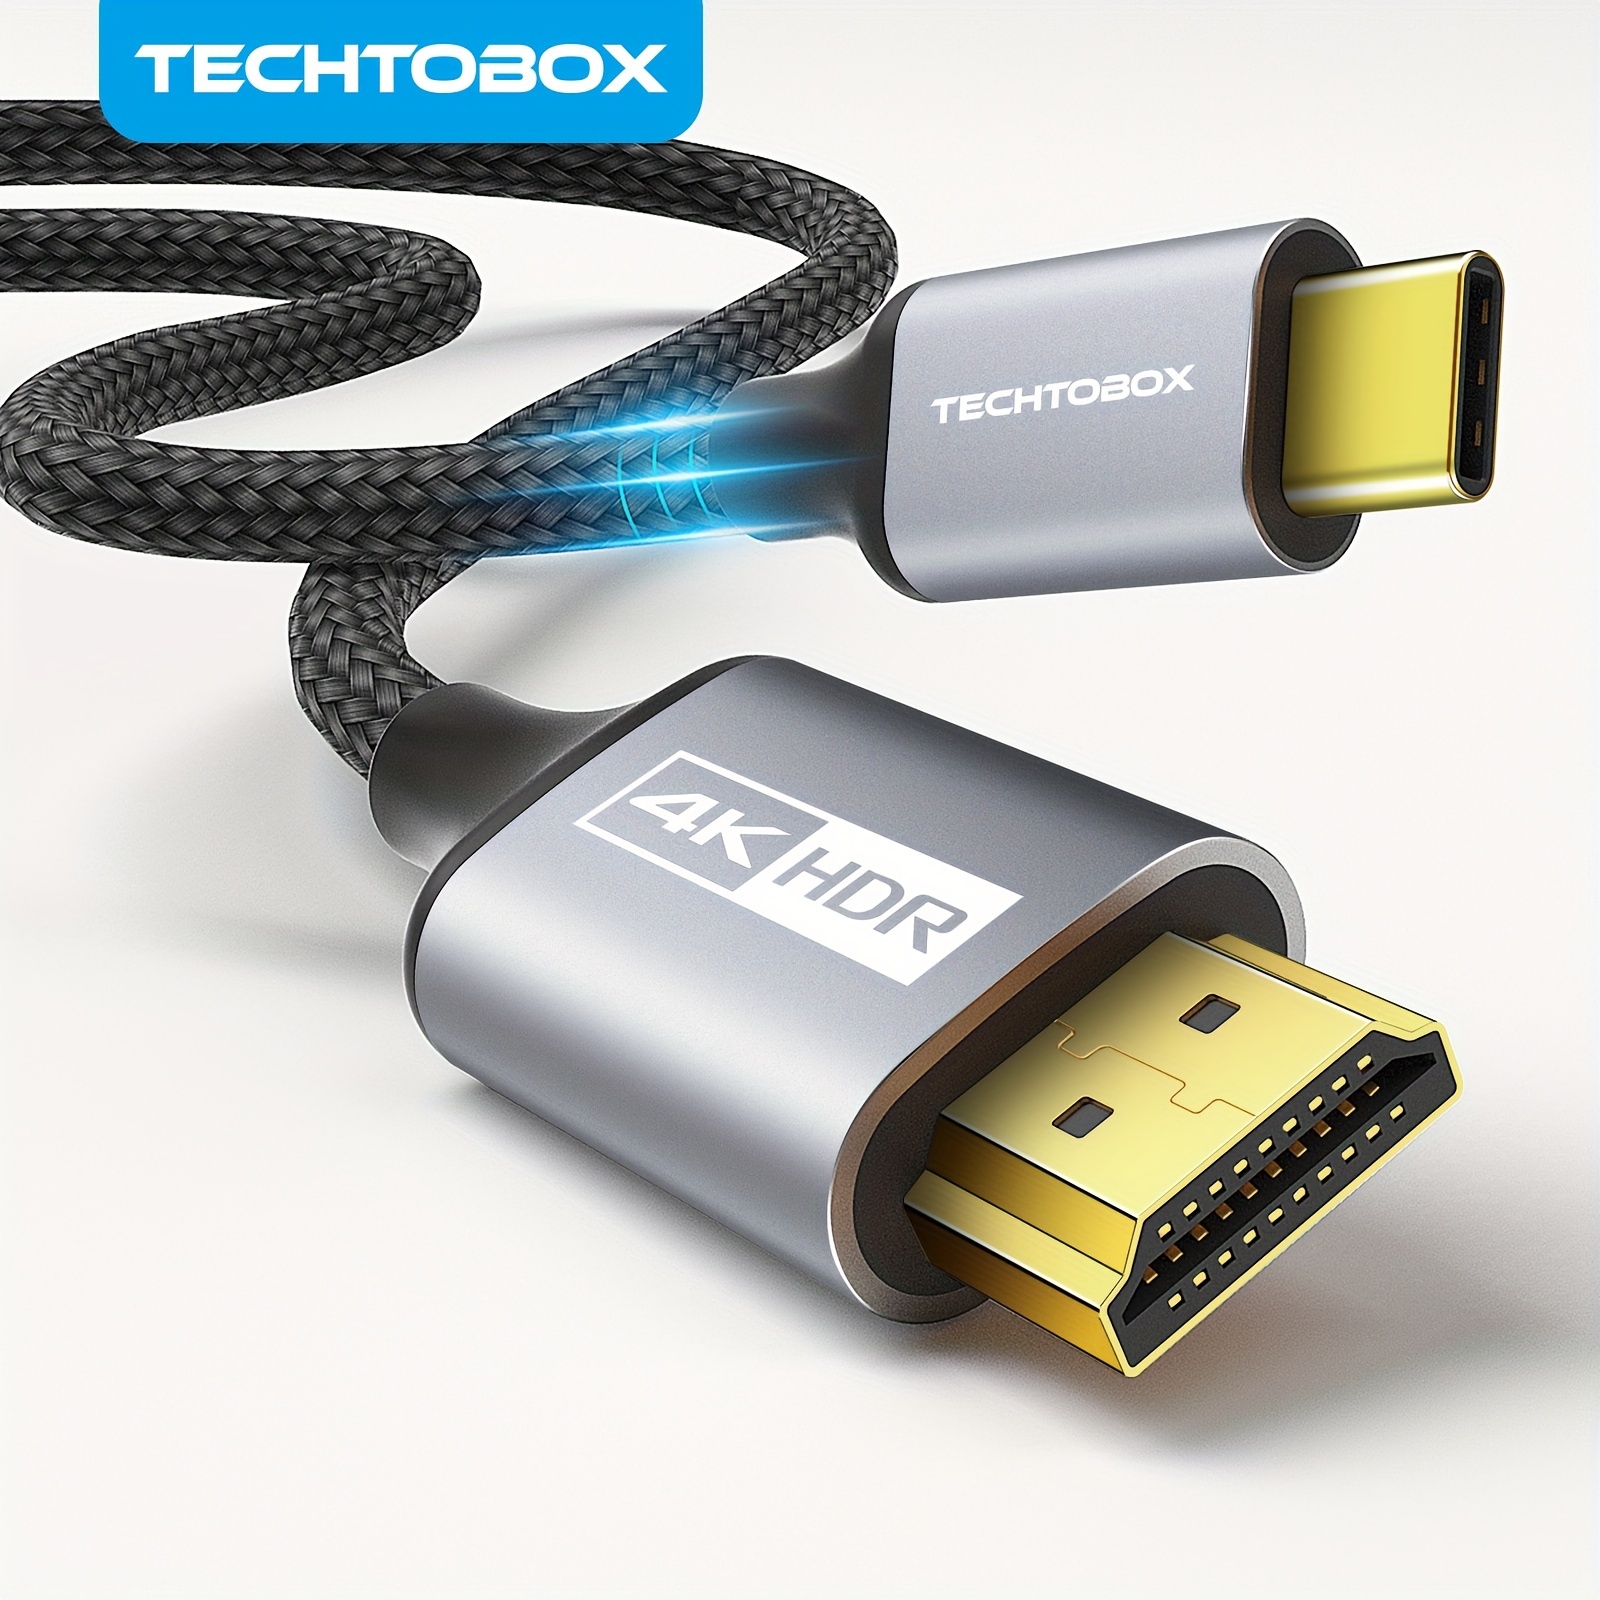 Plugable USB 3.1 Gen 1 Type-C Male to HDMI 2.0 USBC-HDMI-CABLE